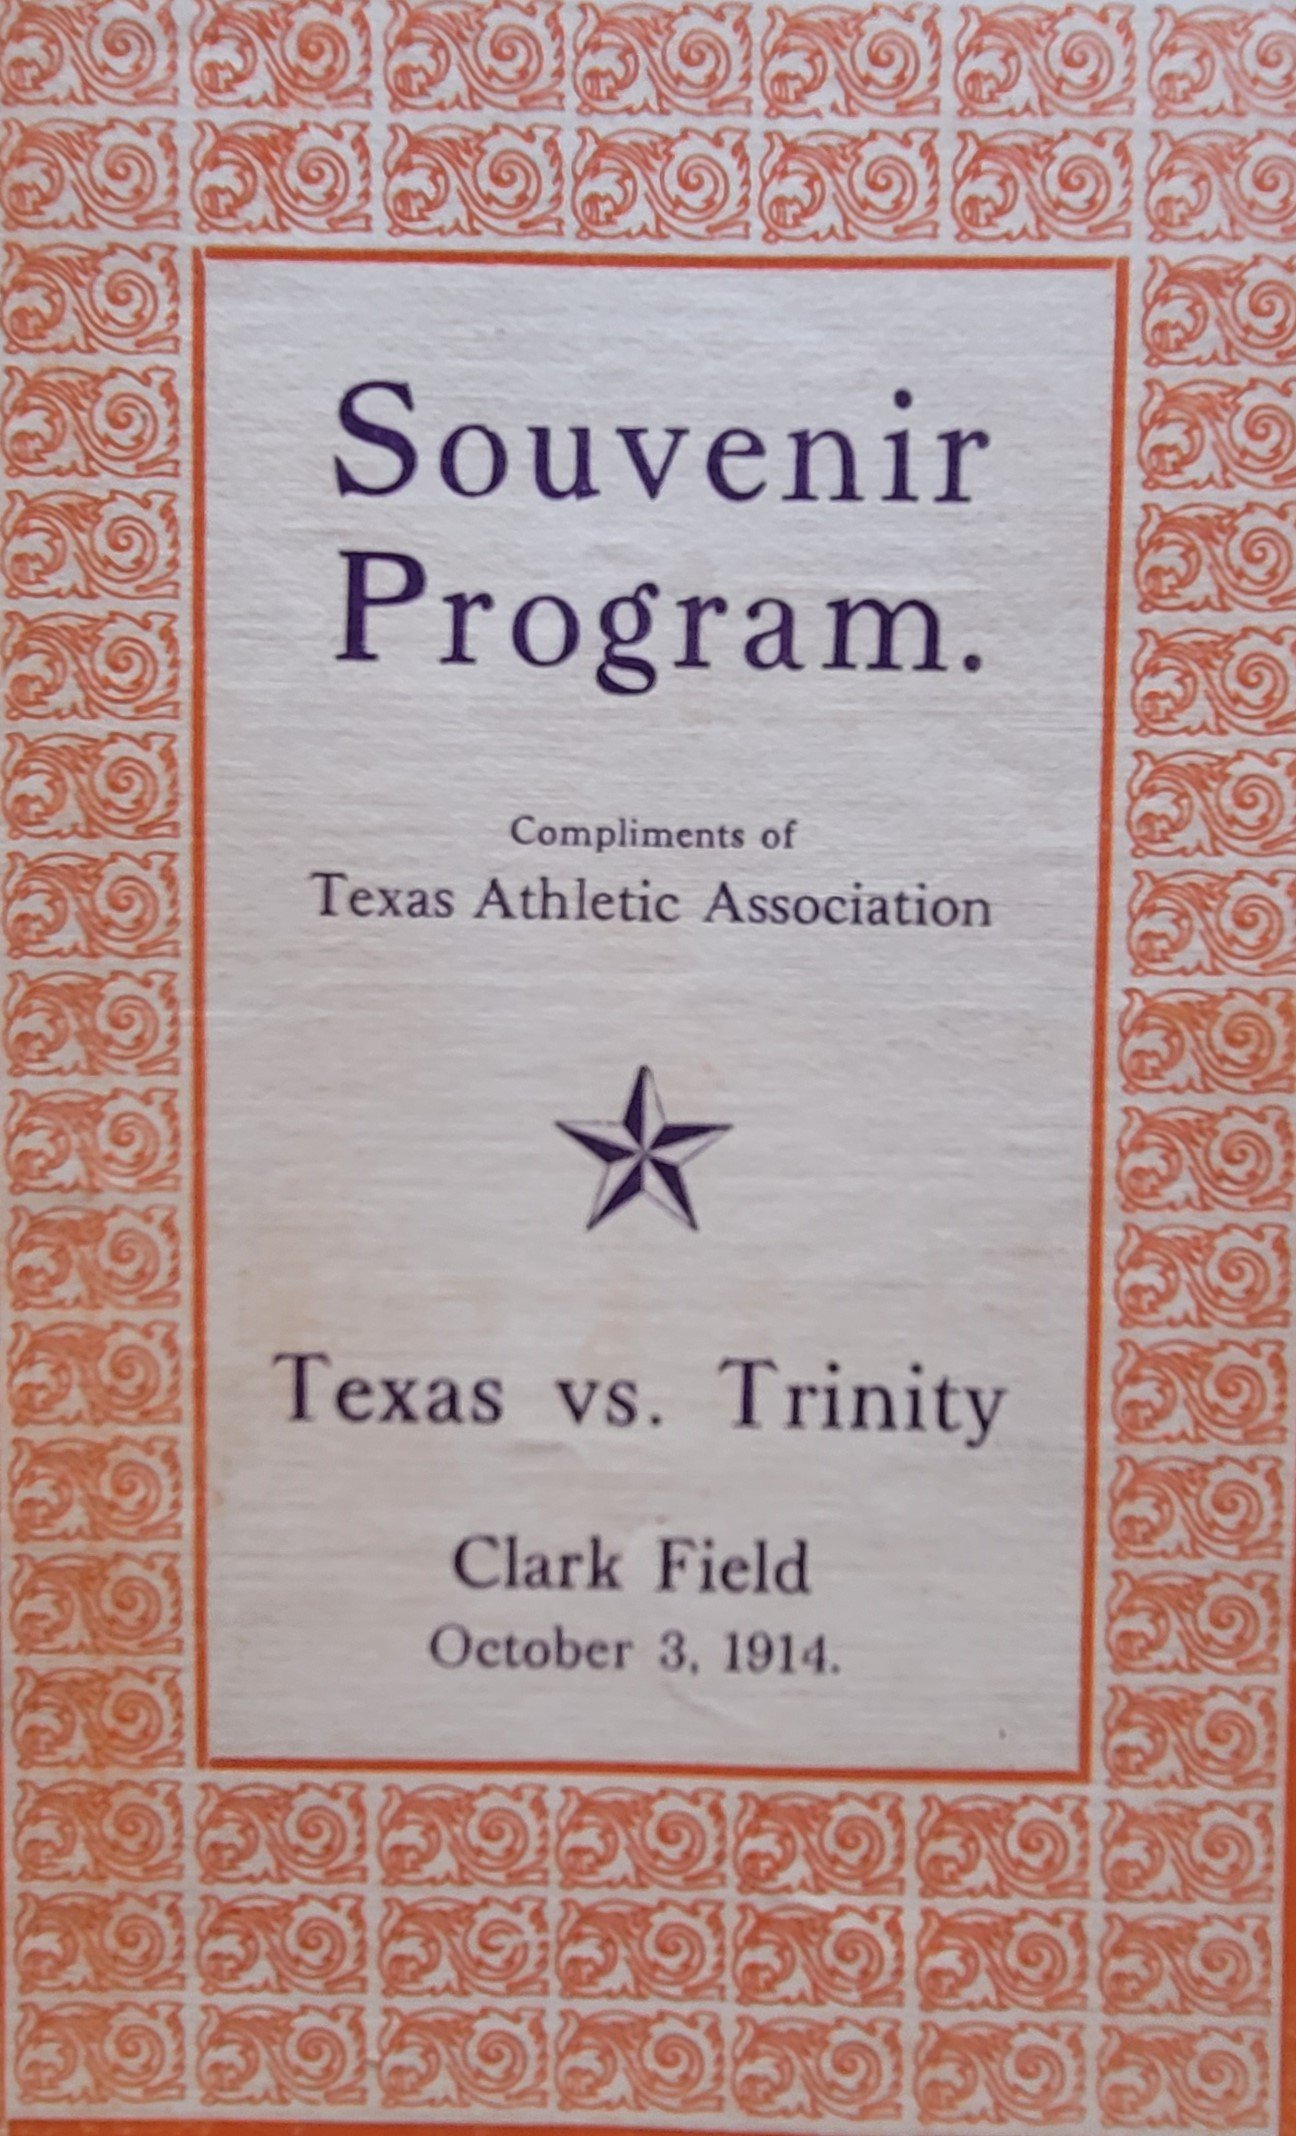 1914 Trininity-texas program.jpg